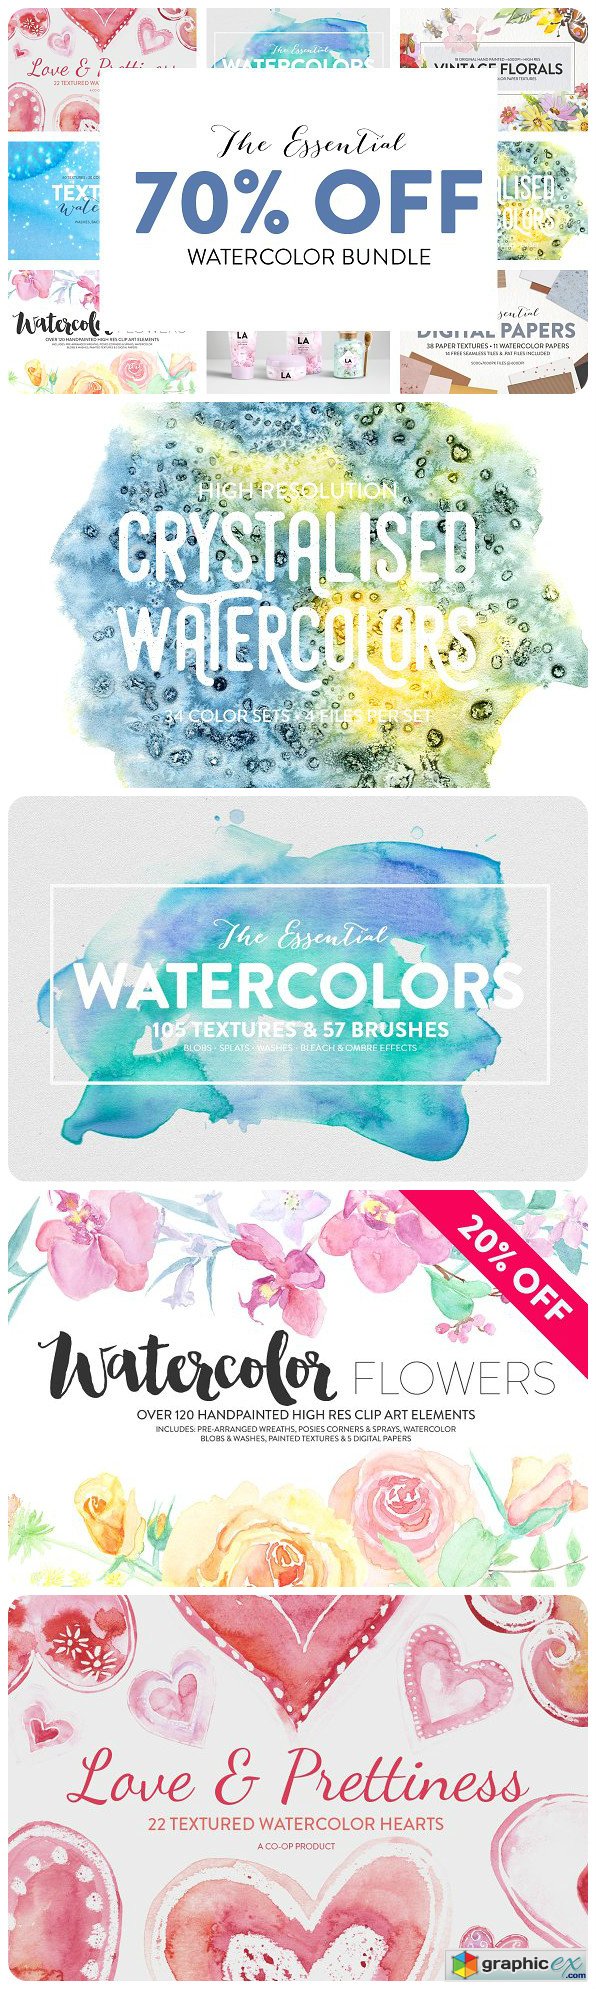 Watercolor boho flowers